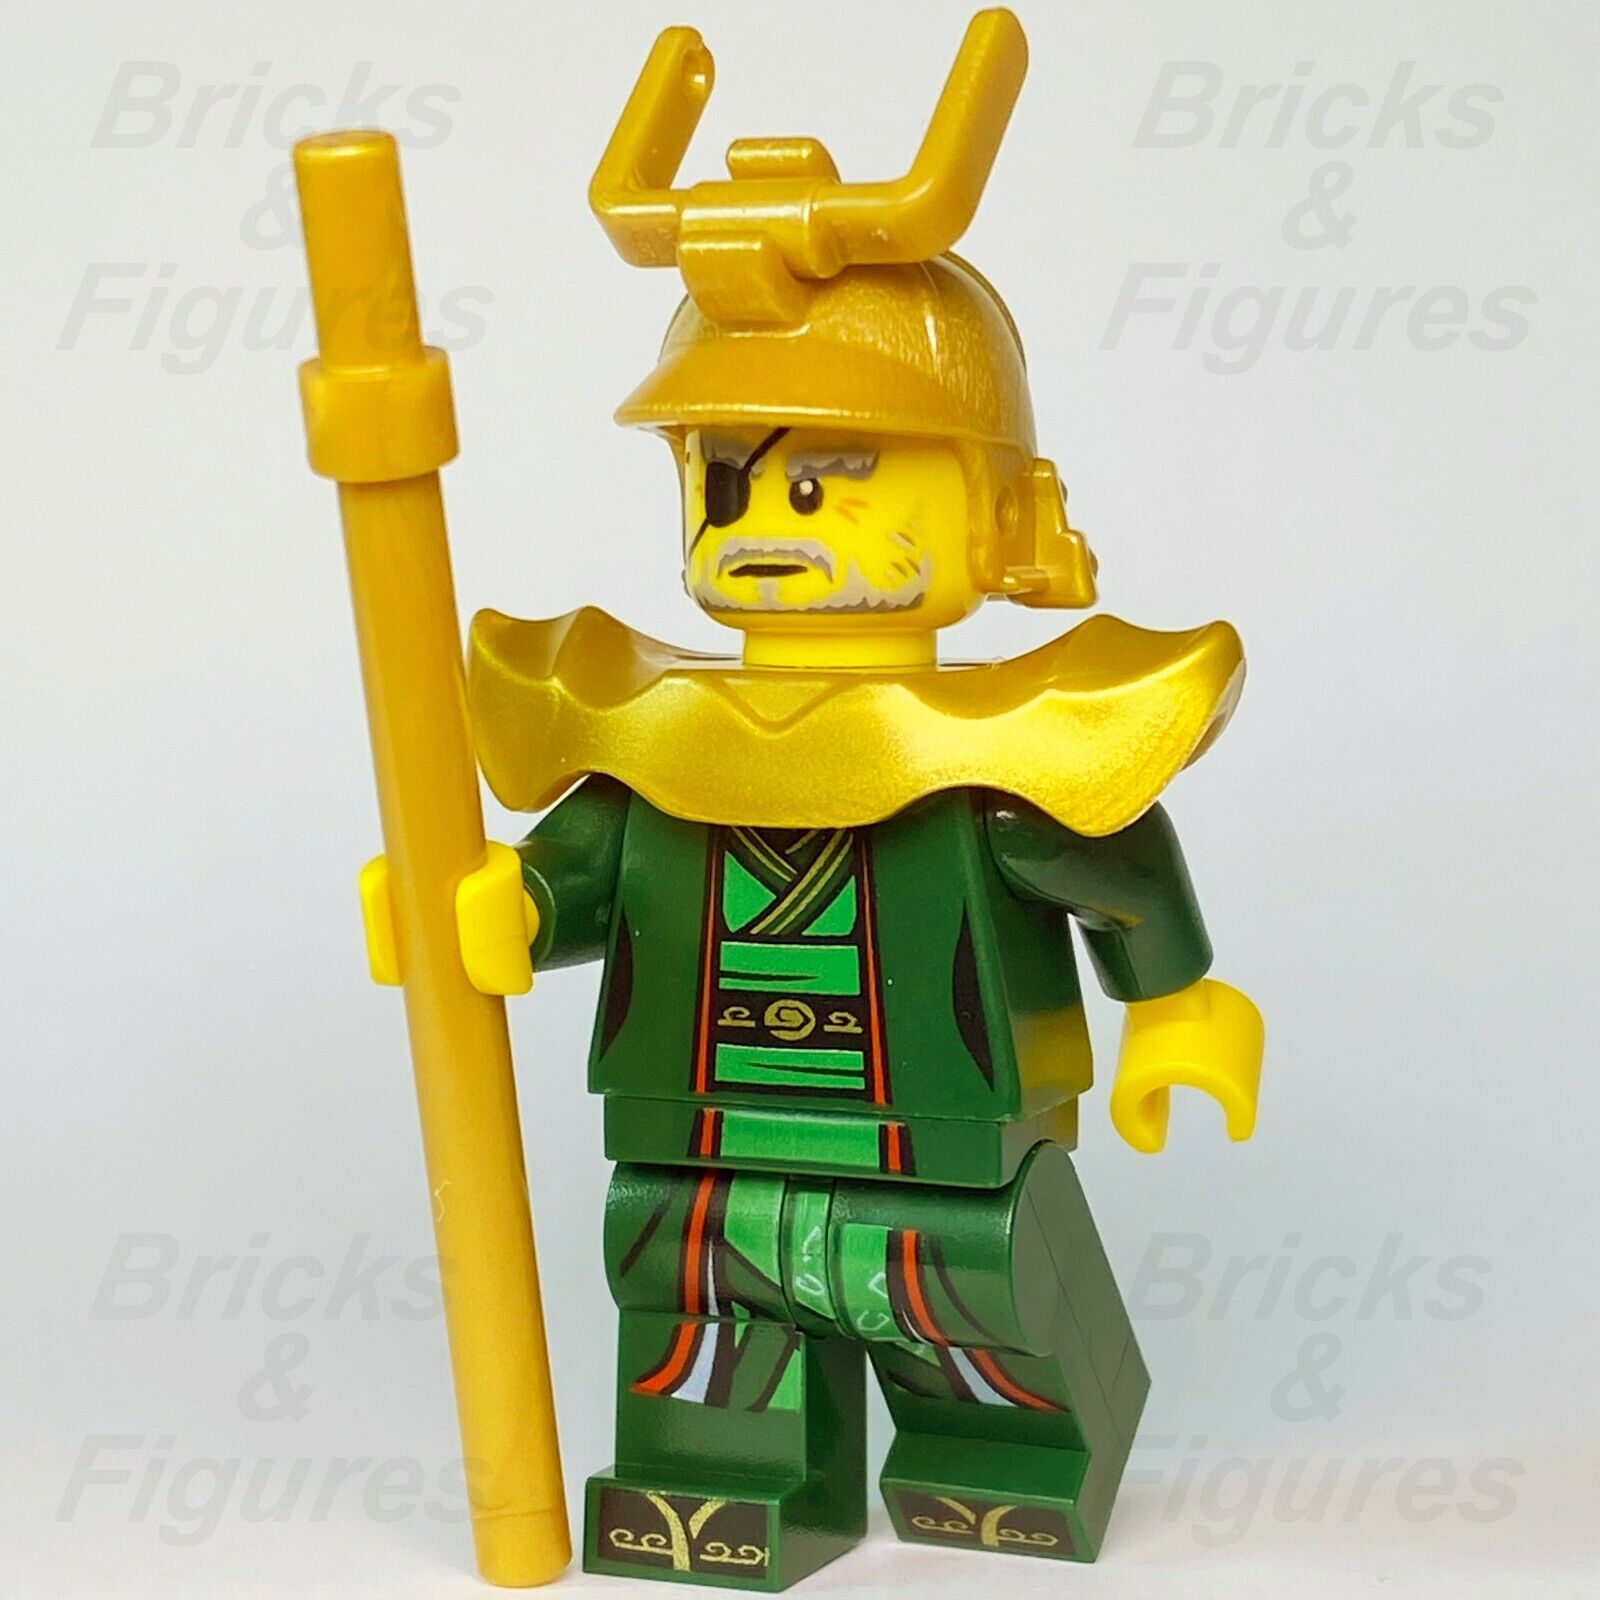 New Ninjago LEGO Hutchins Sons of Garmadon Royal Minifigure from set 70643 - Bricks & Figures